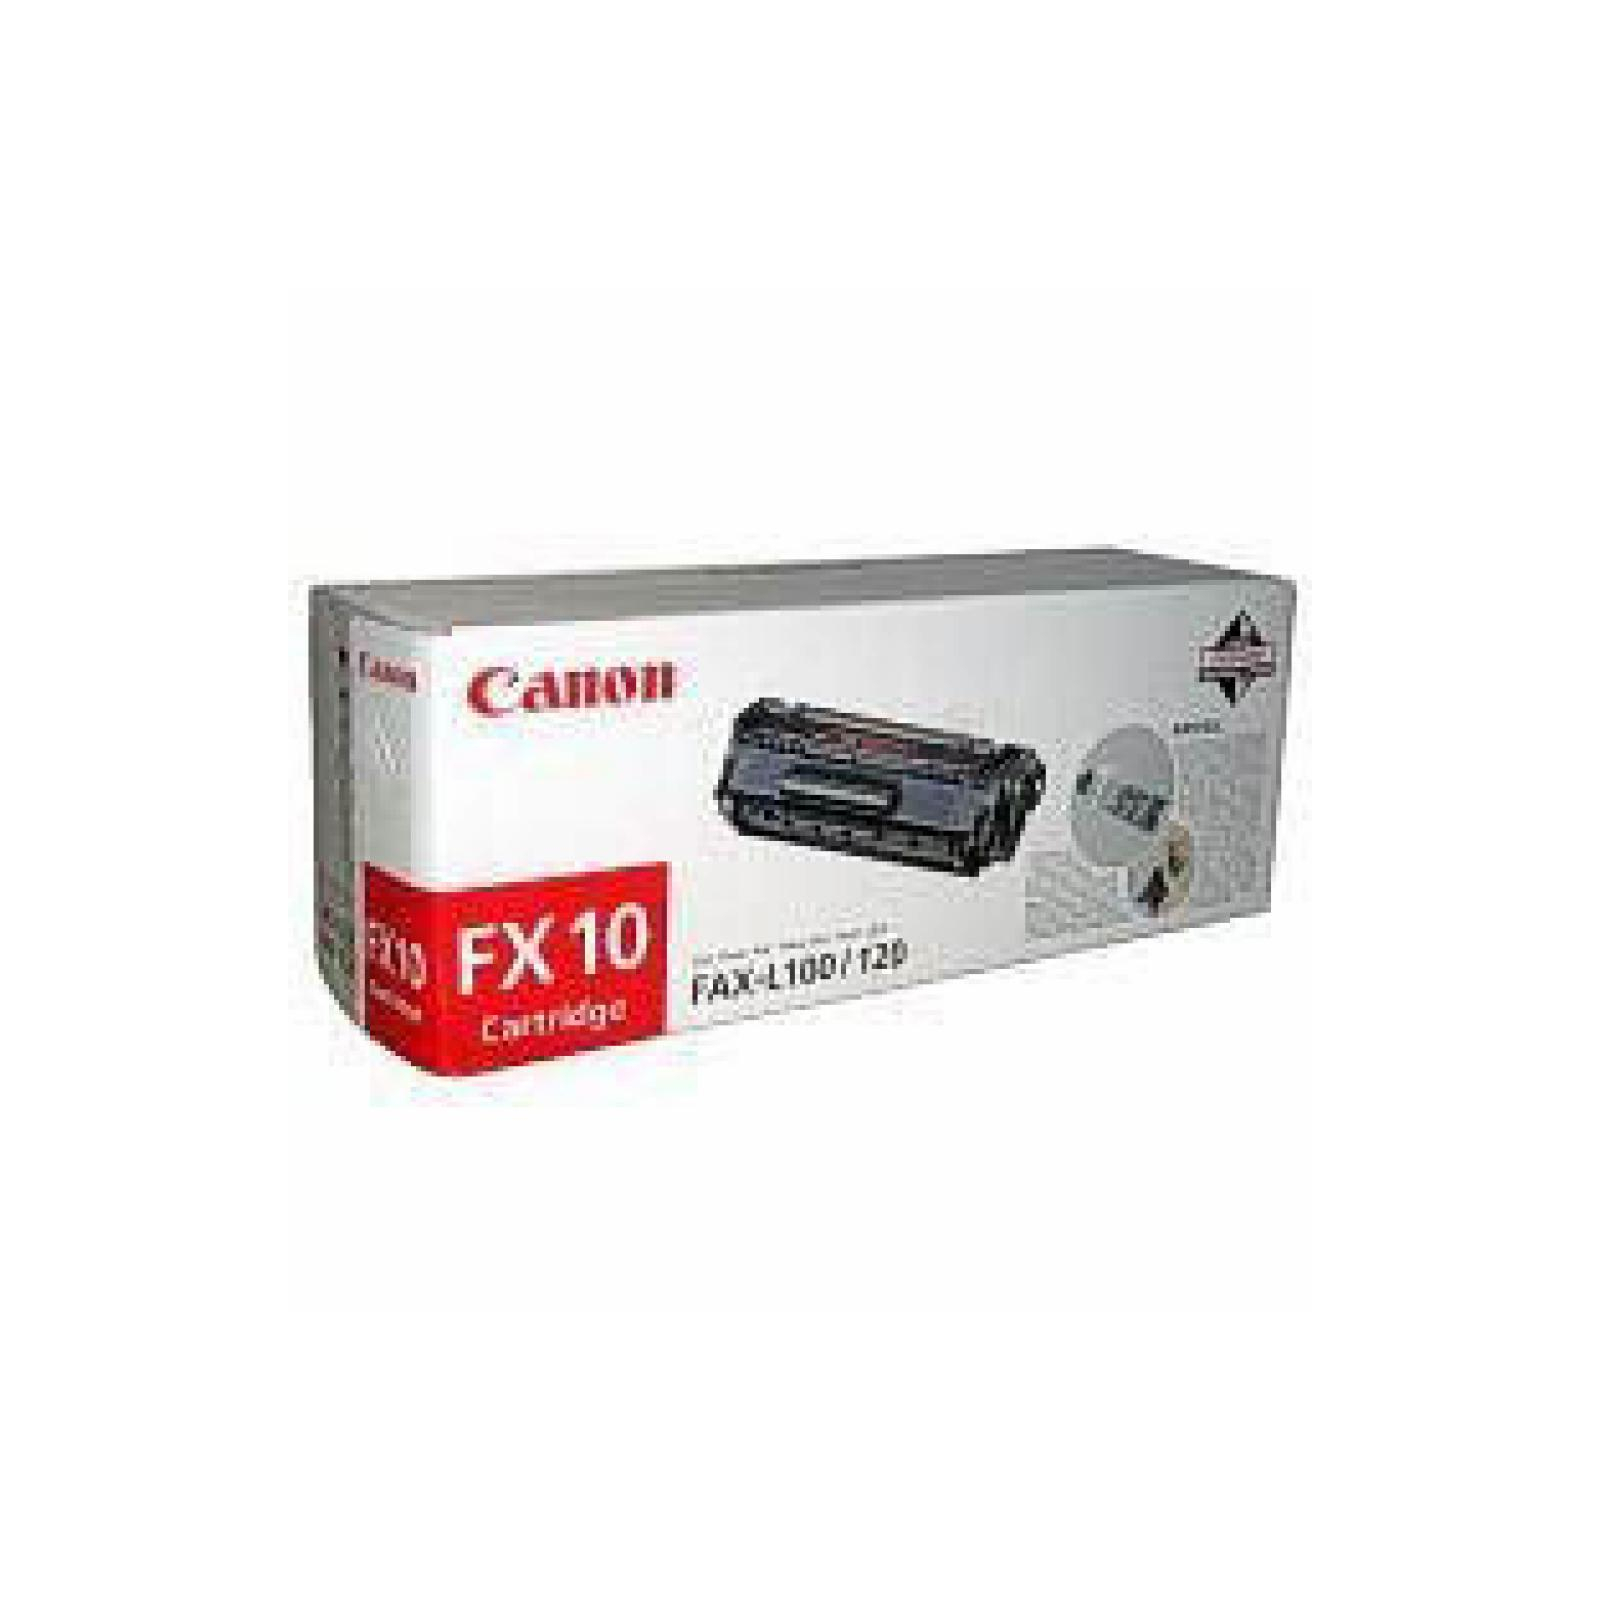 Услуга восстановление картриджа Canon FX-10 Brain Service